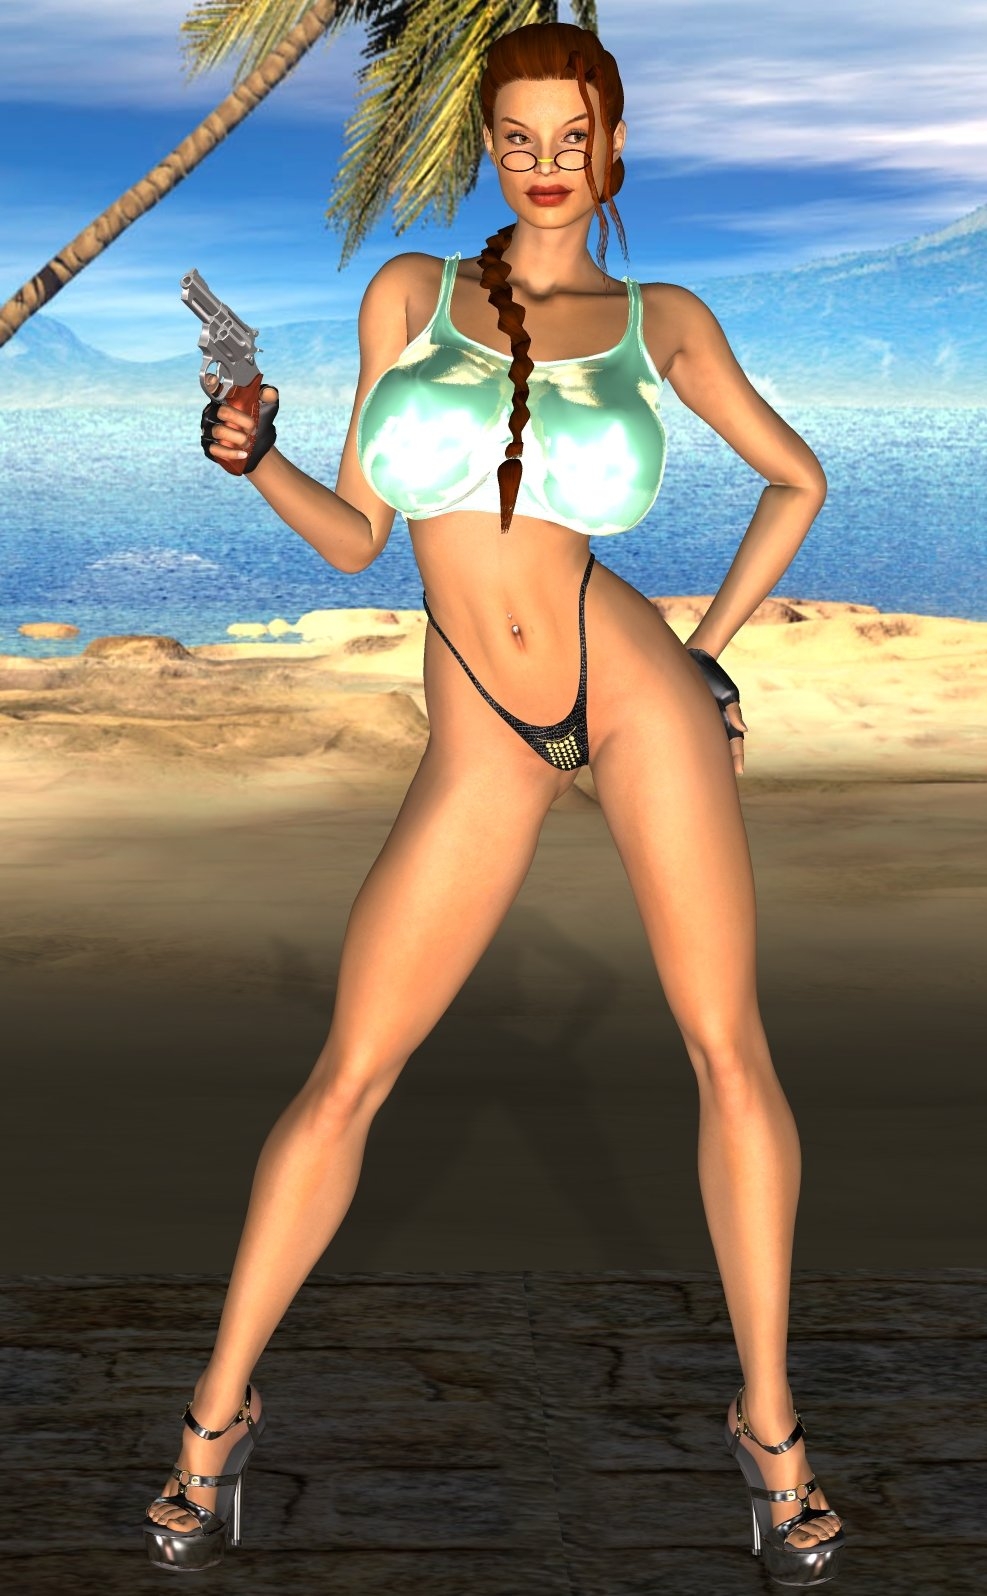 CleonXXI / Ricklinkous - Lara Croft 3D pics collection 58